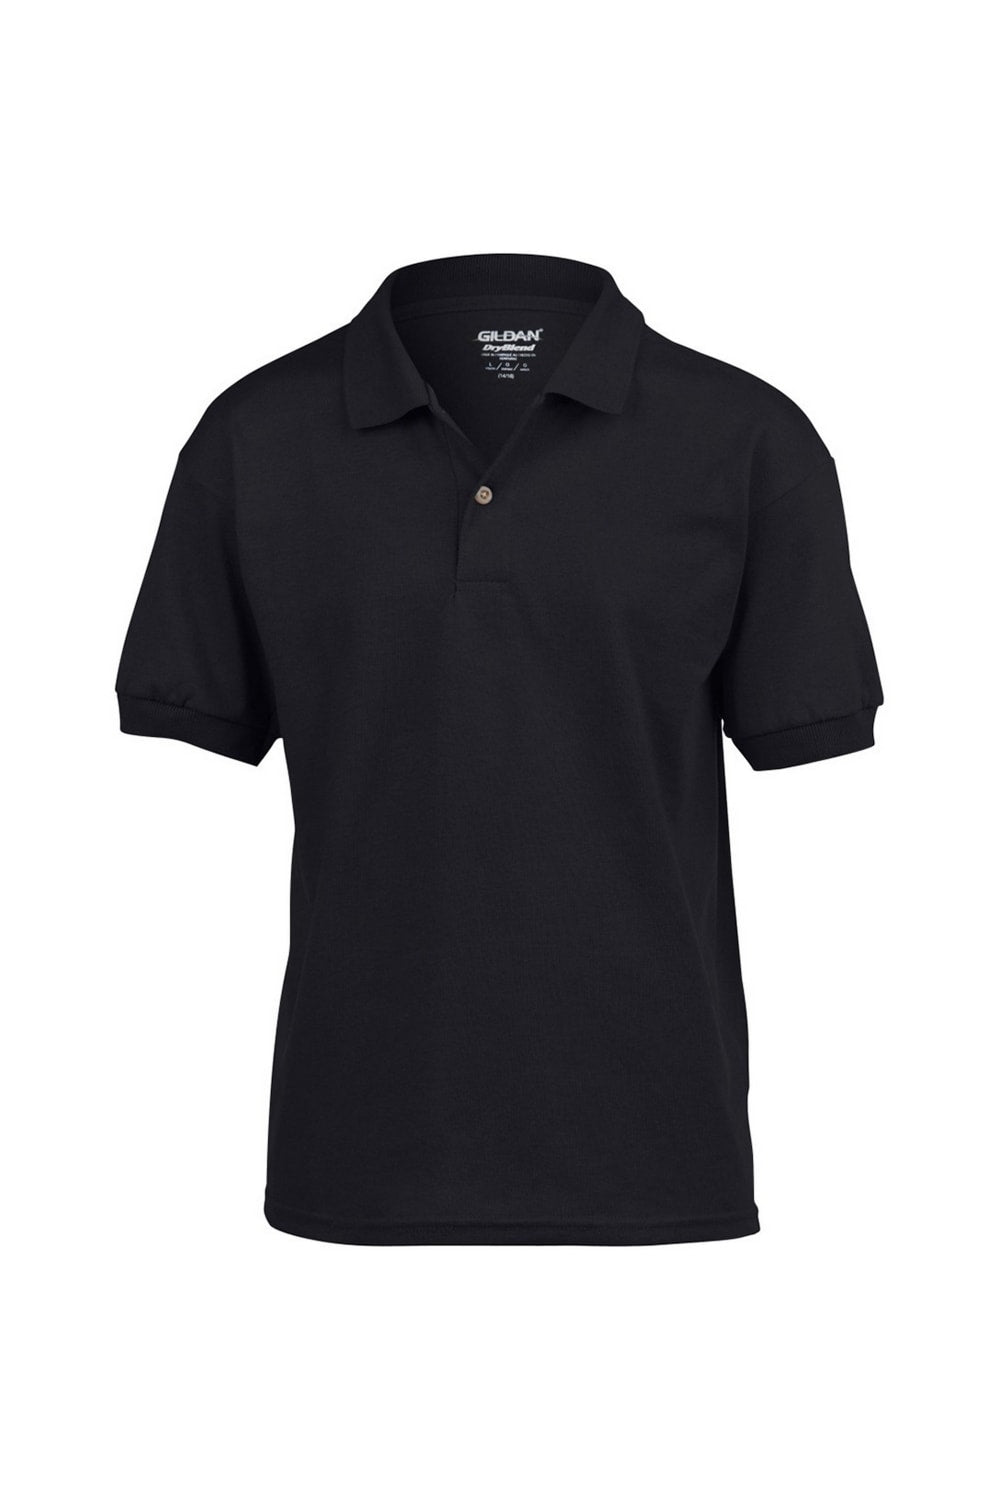 Gildan DryBlend Childrens Unisex Jersey Polo Shirt (Pack of 2) (Black)